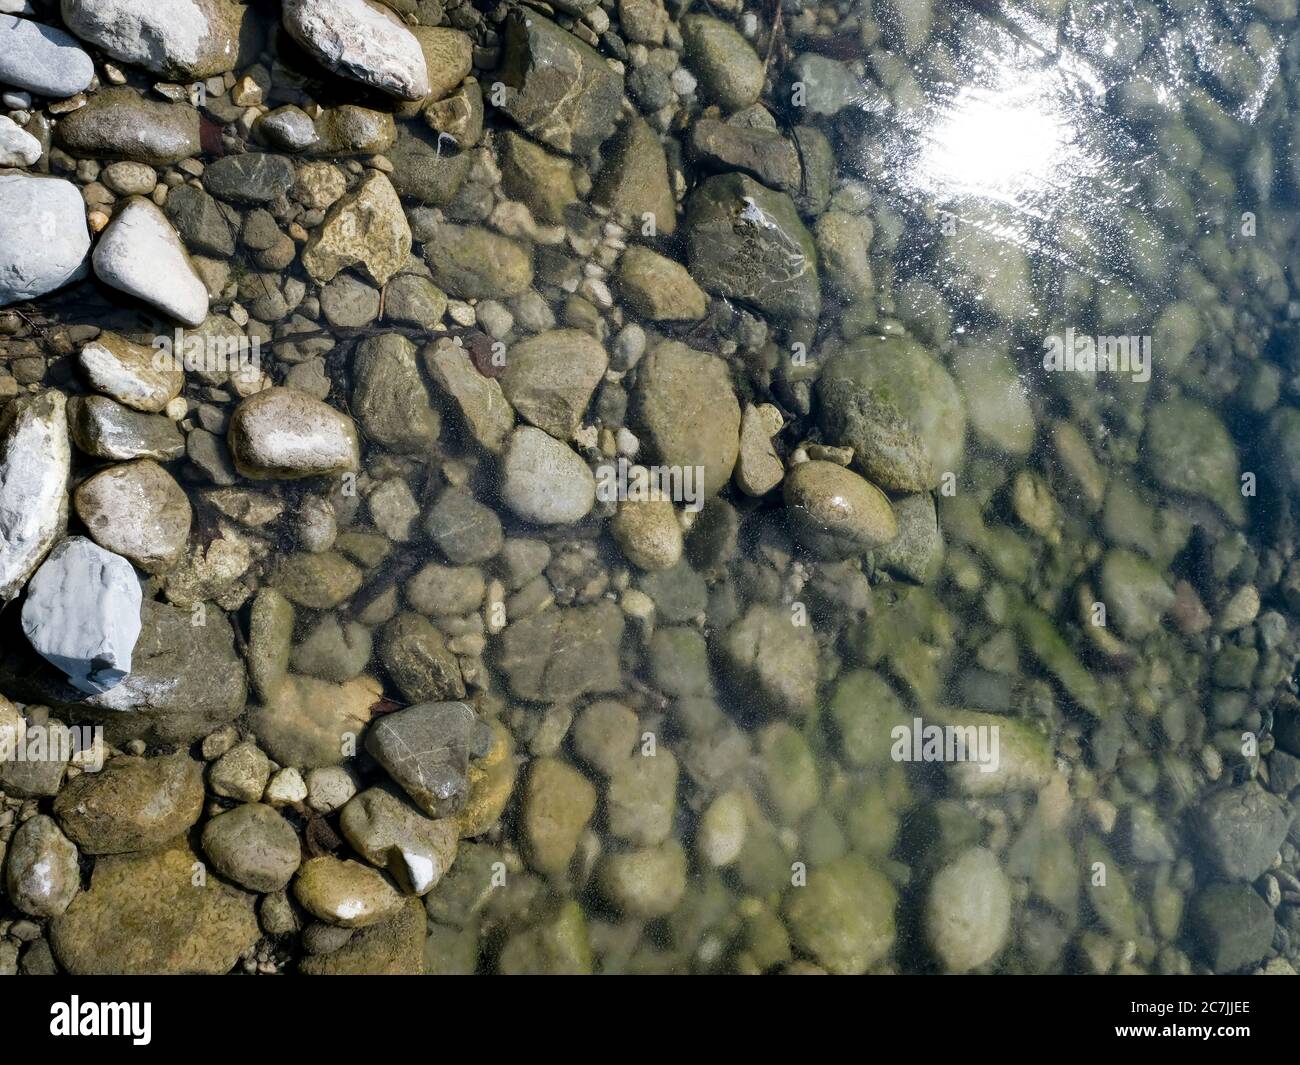 River bed, stones Stock Photo